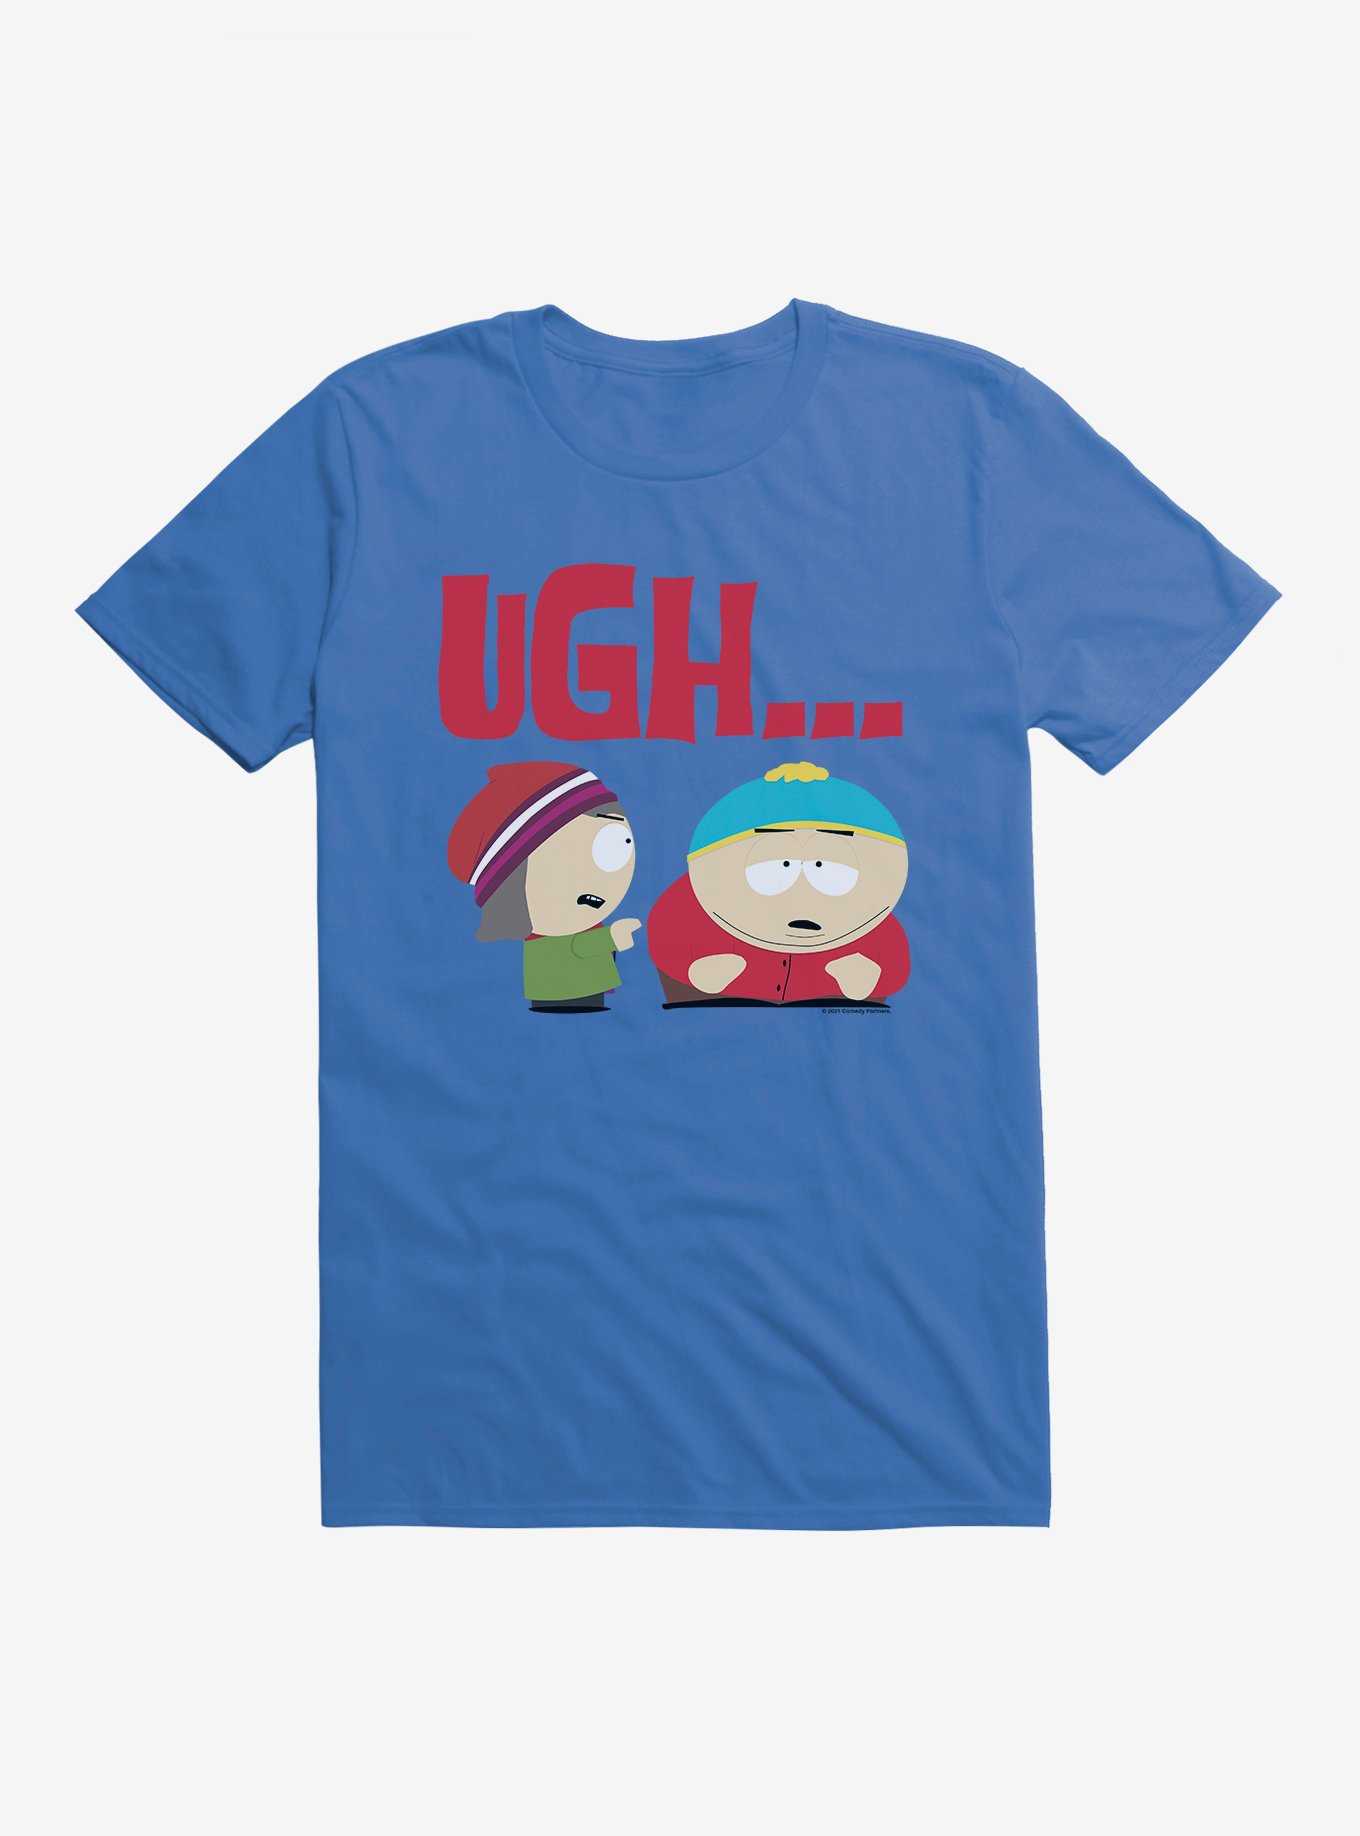 South Park Season Reference Cartman Relationship Problems T-Shirt, , hi-res